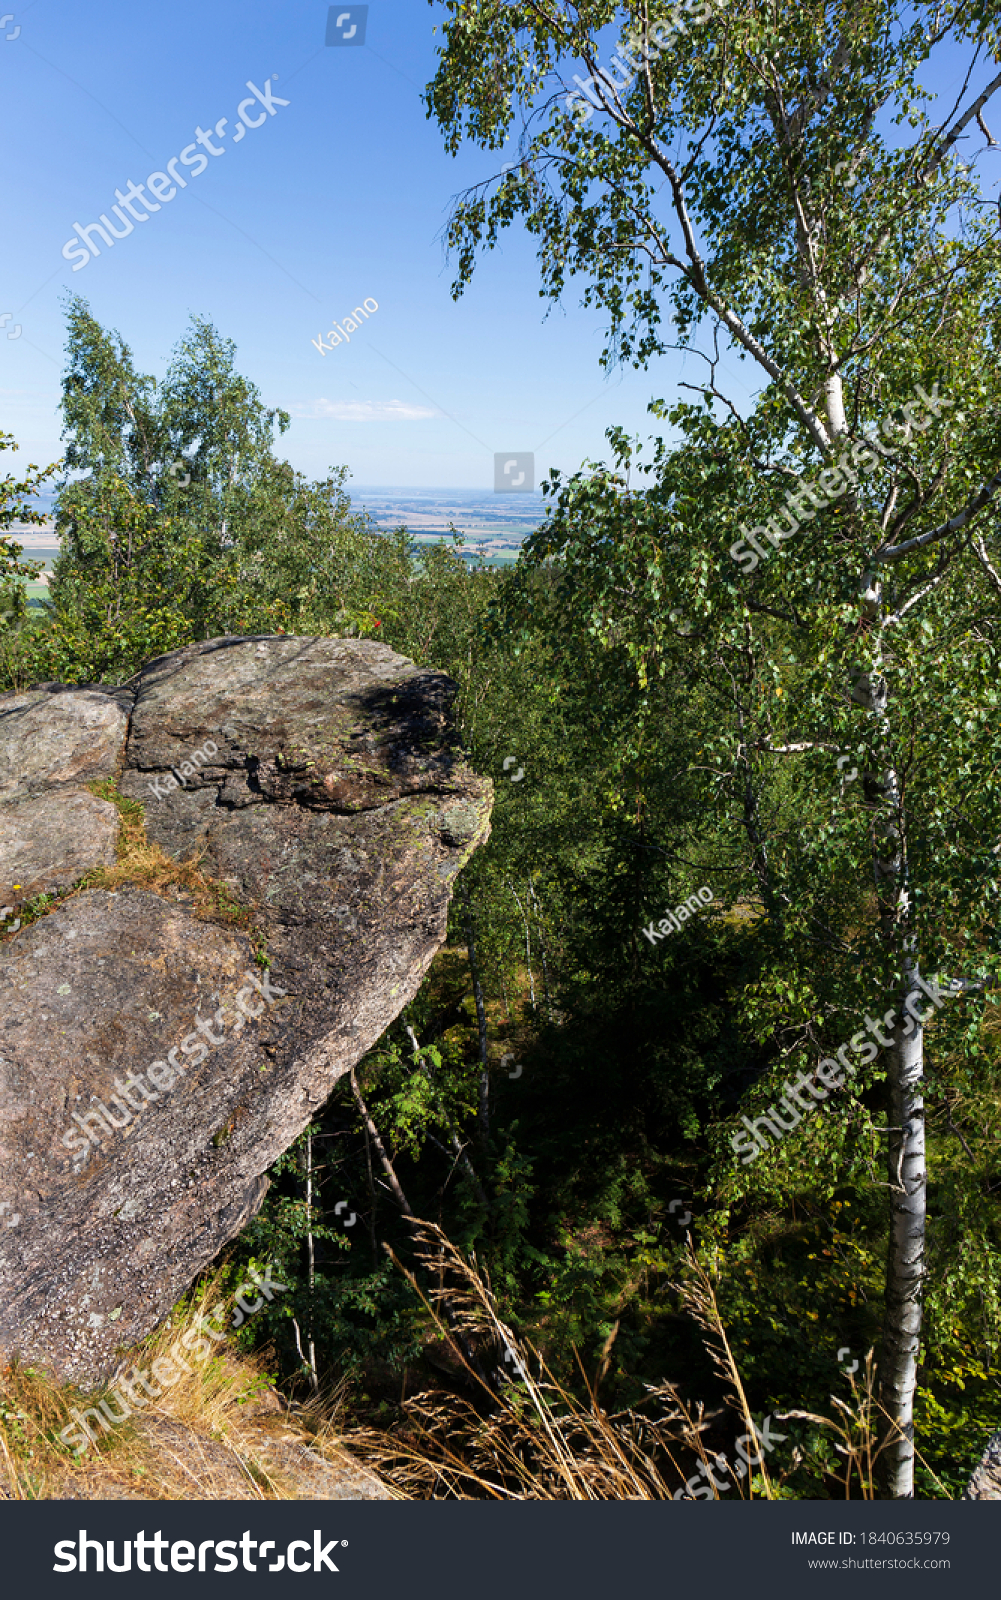 Landscape from the Hill High Rock, Vysoky Kamen, in Rychlebske Mountains, Czech Republic #1840635979